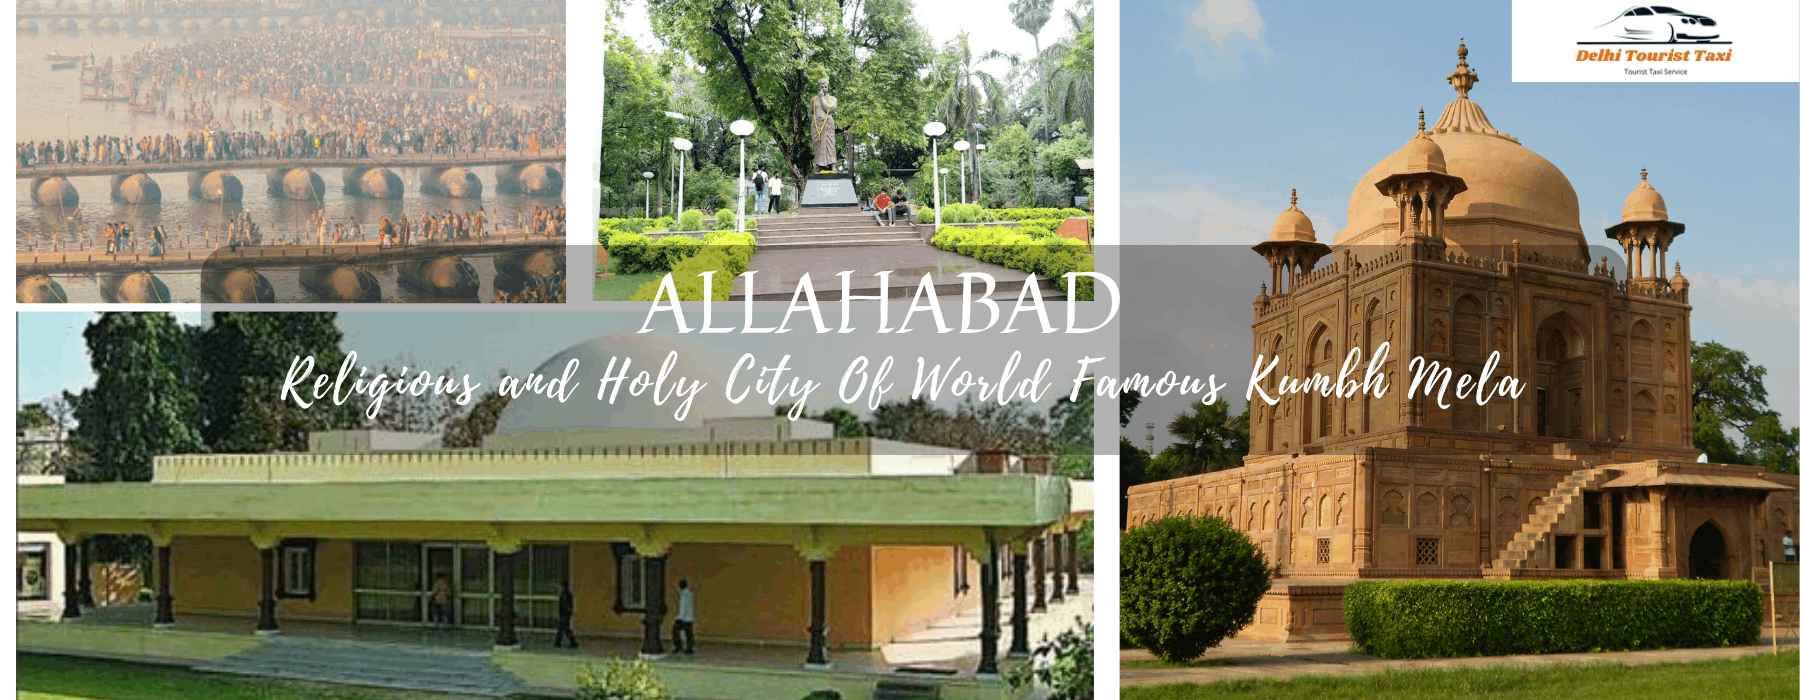 Allahabad_tourist_place